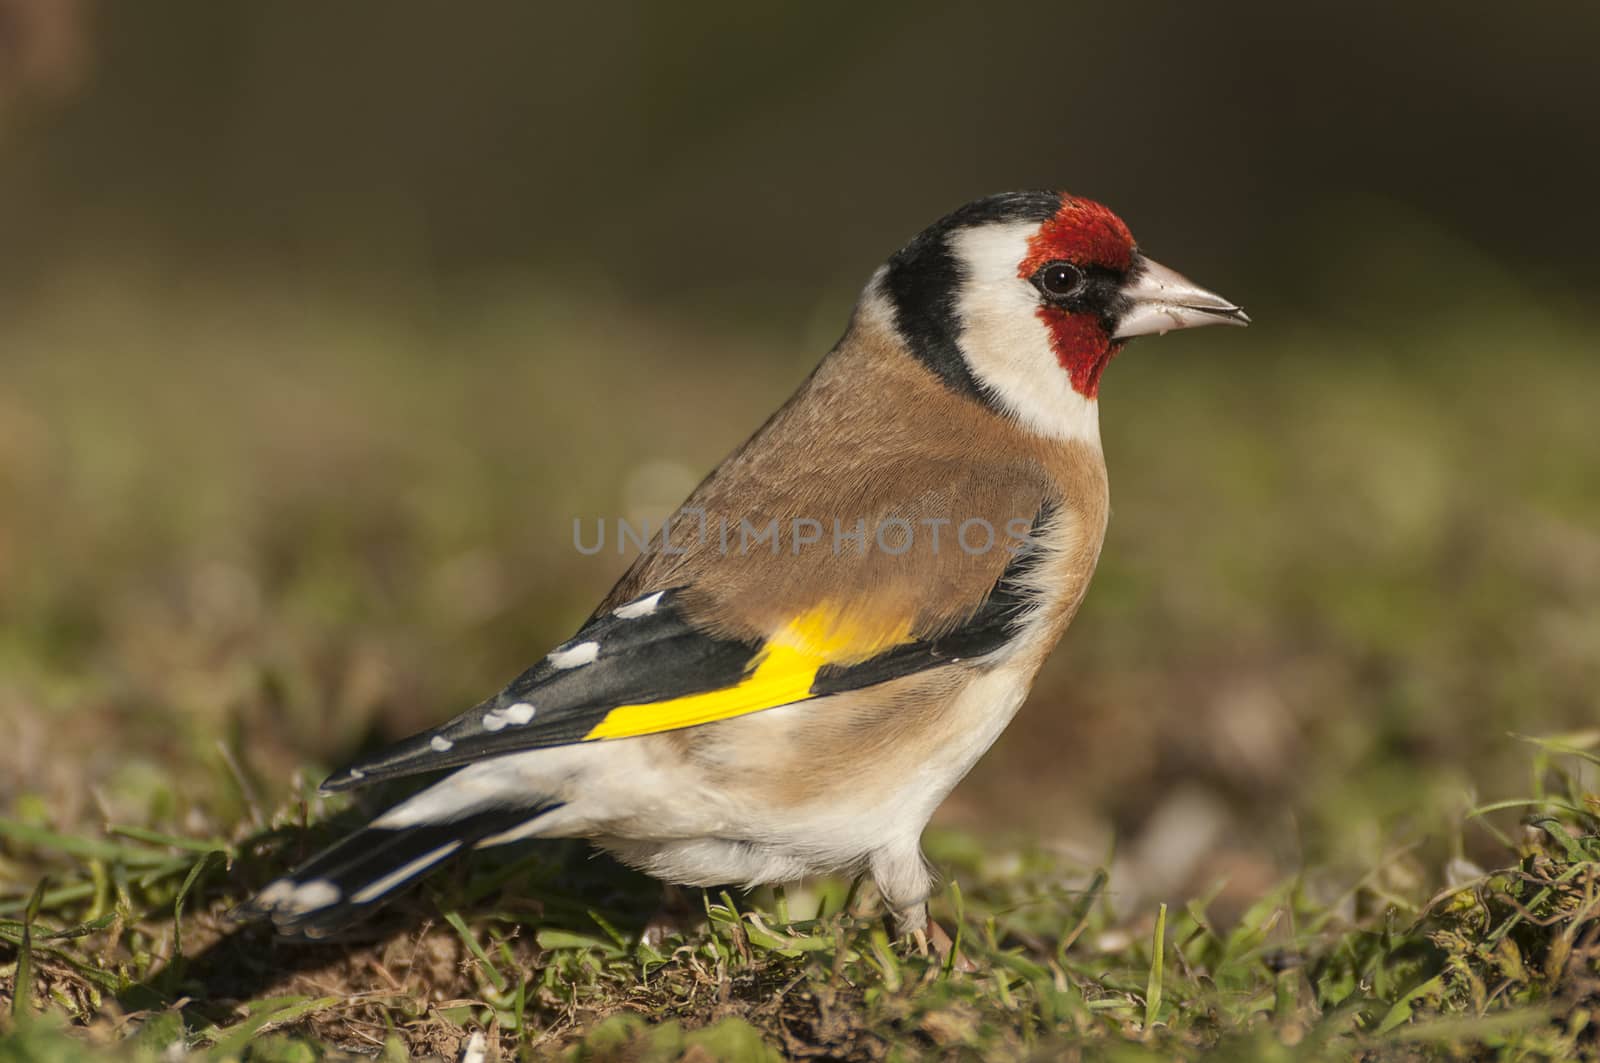 Goldfinch - Carduelis carduelis, portrait looking for food, plum by jalonsohu@gmail.com